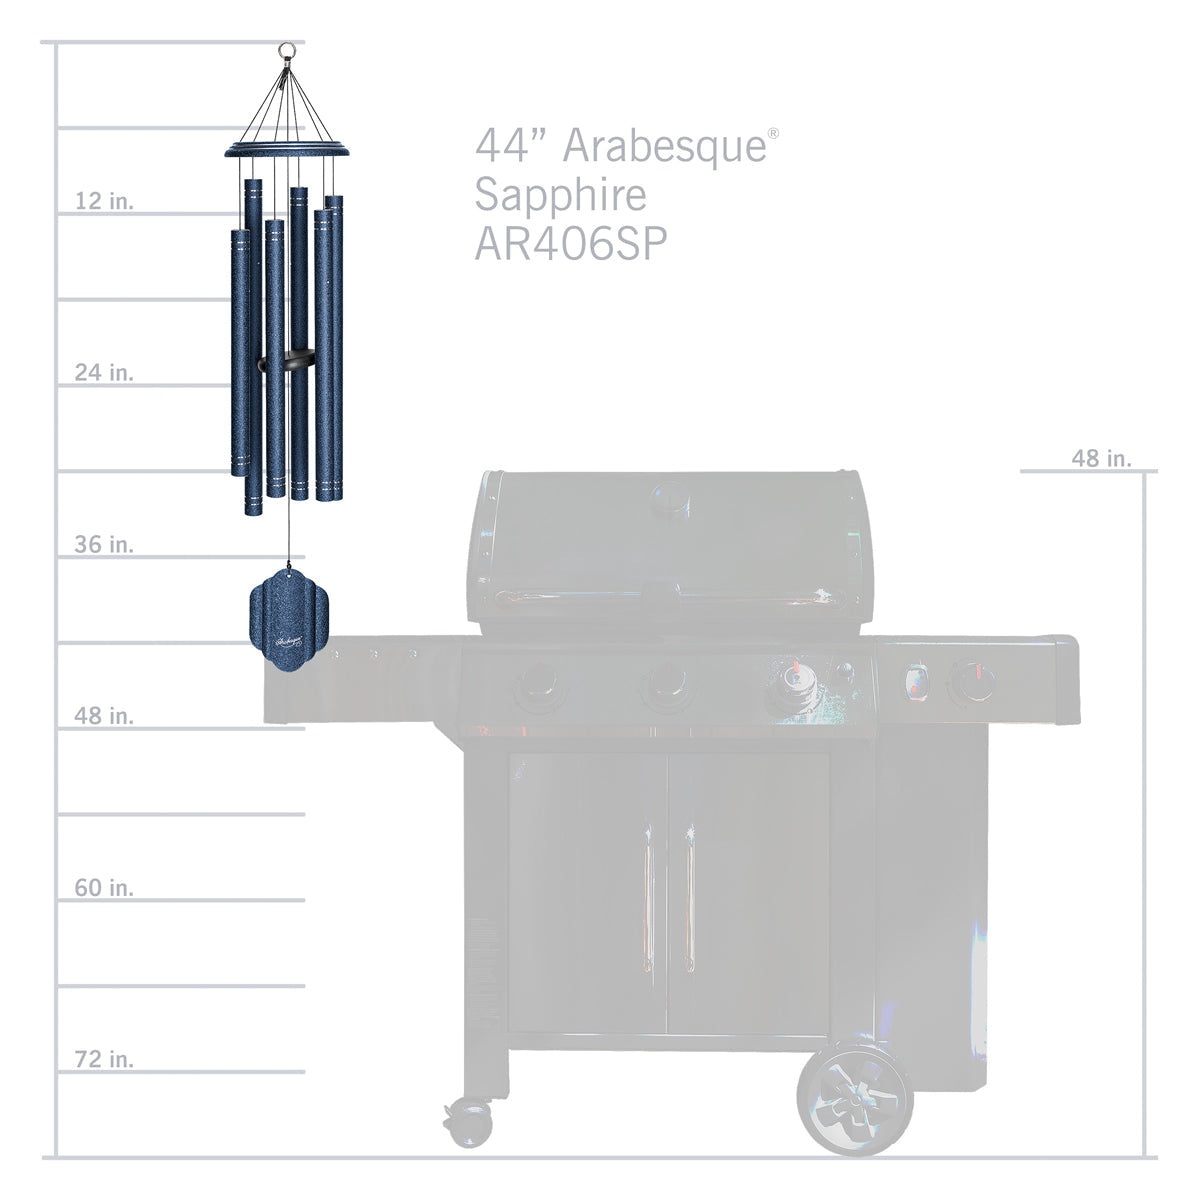 Arabesque 44-inch Wind Chime - Sapphire